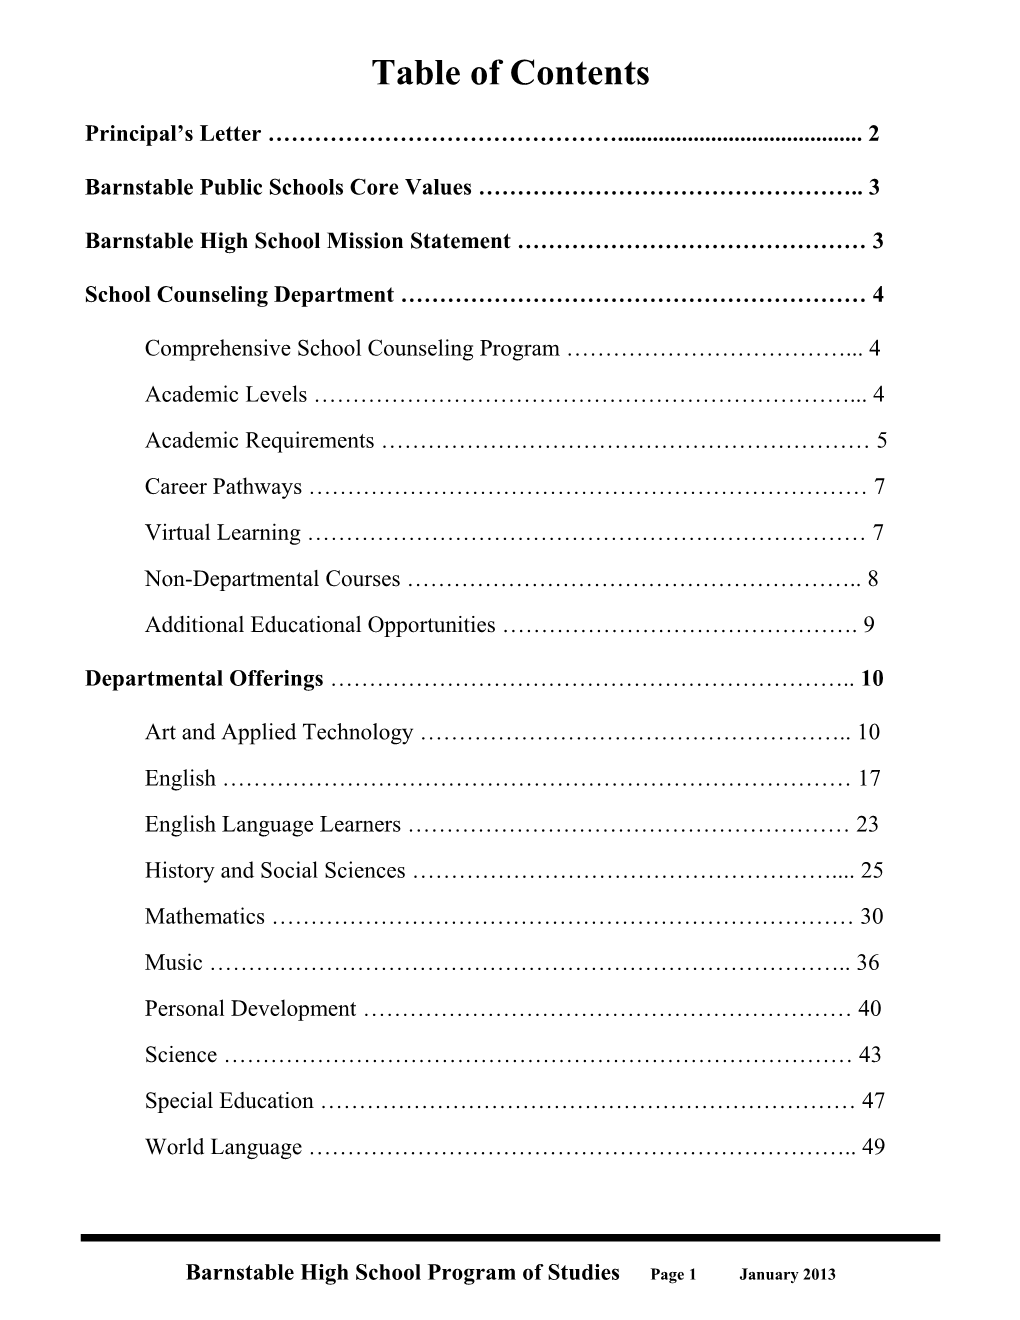 Barnstable Public Schools Core Values 3